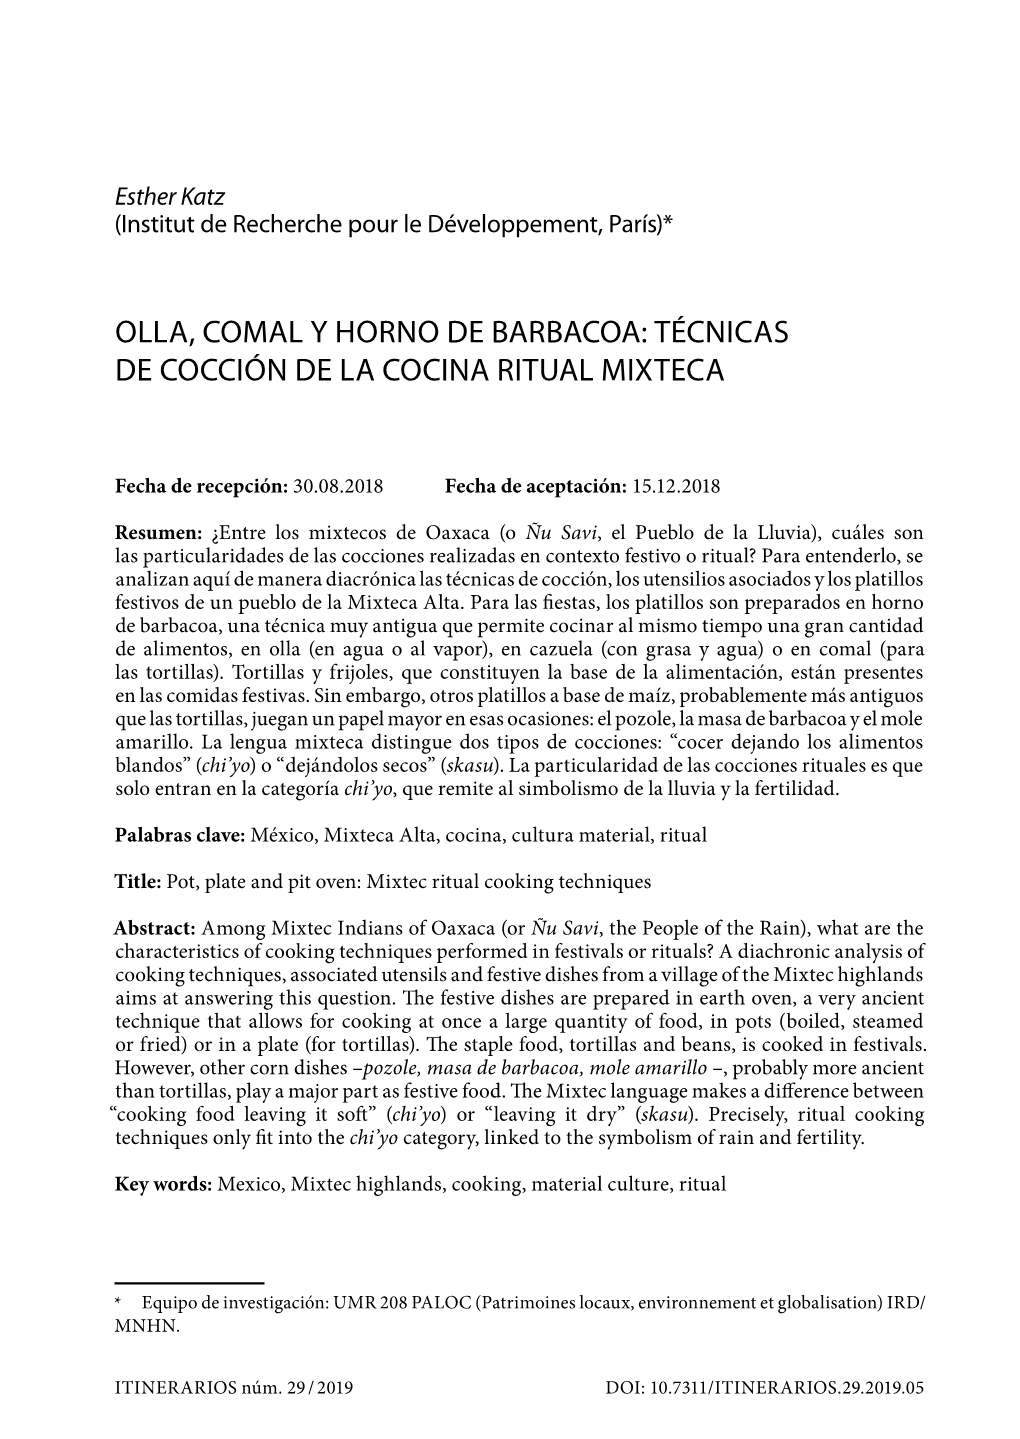 Olla, Comal Y Horno De Barbacoa: Técnicas De Cocción De La Cocina Ritual Mixteca